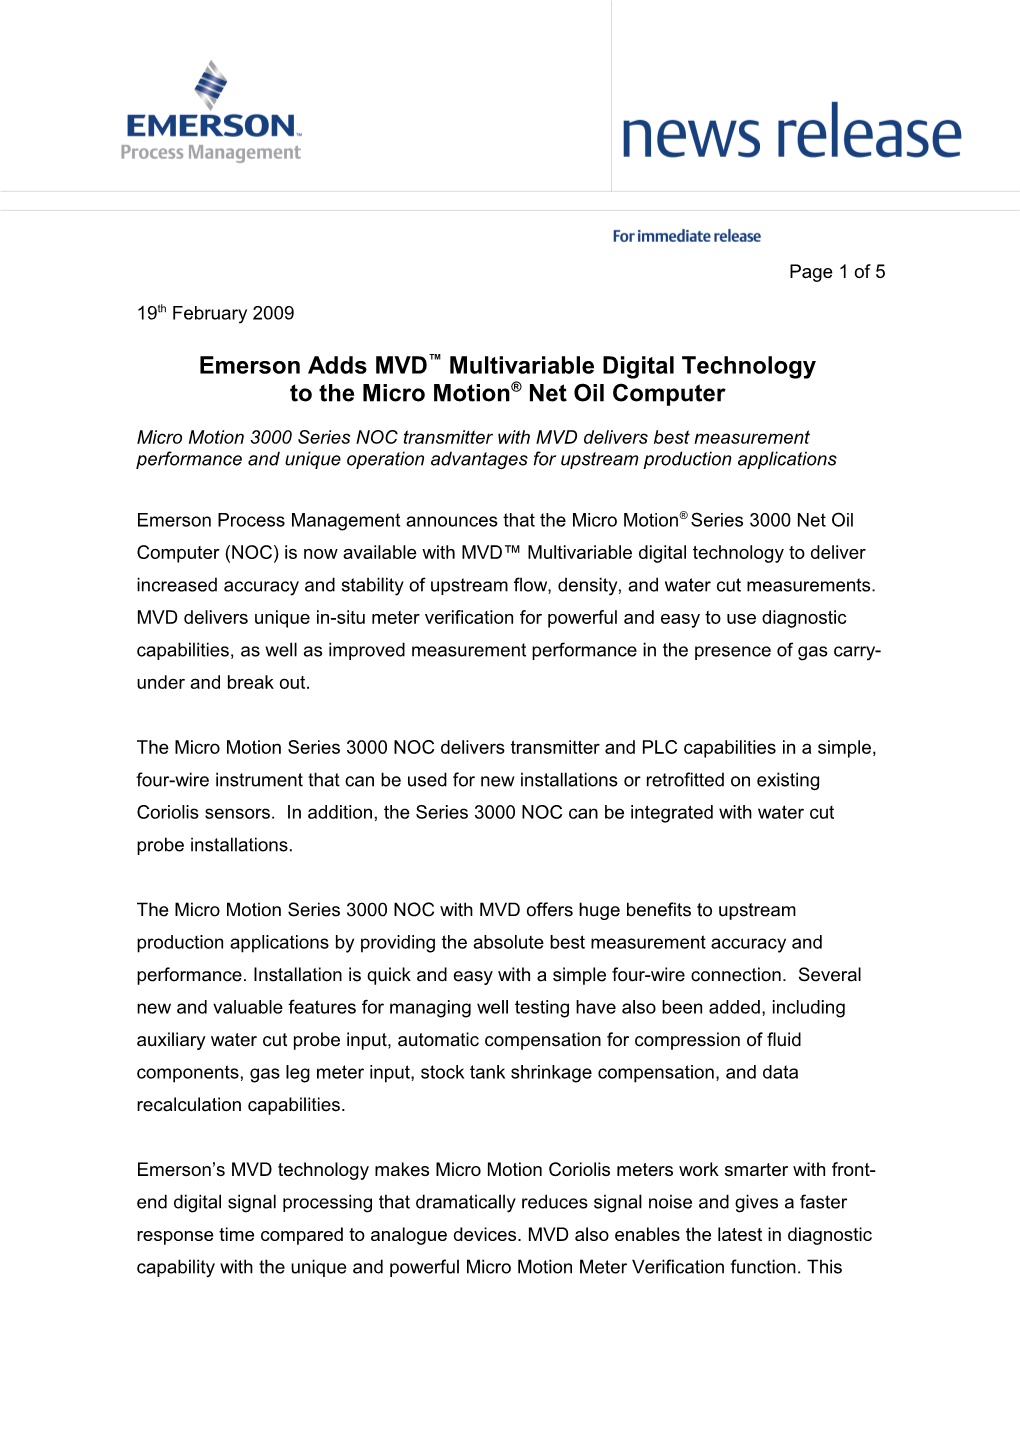 Emerson Adds MVD Multivariable Digital Technology